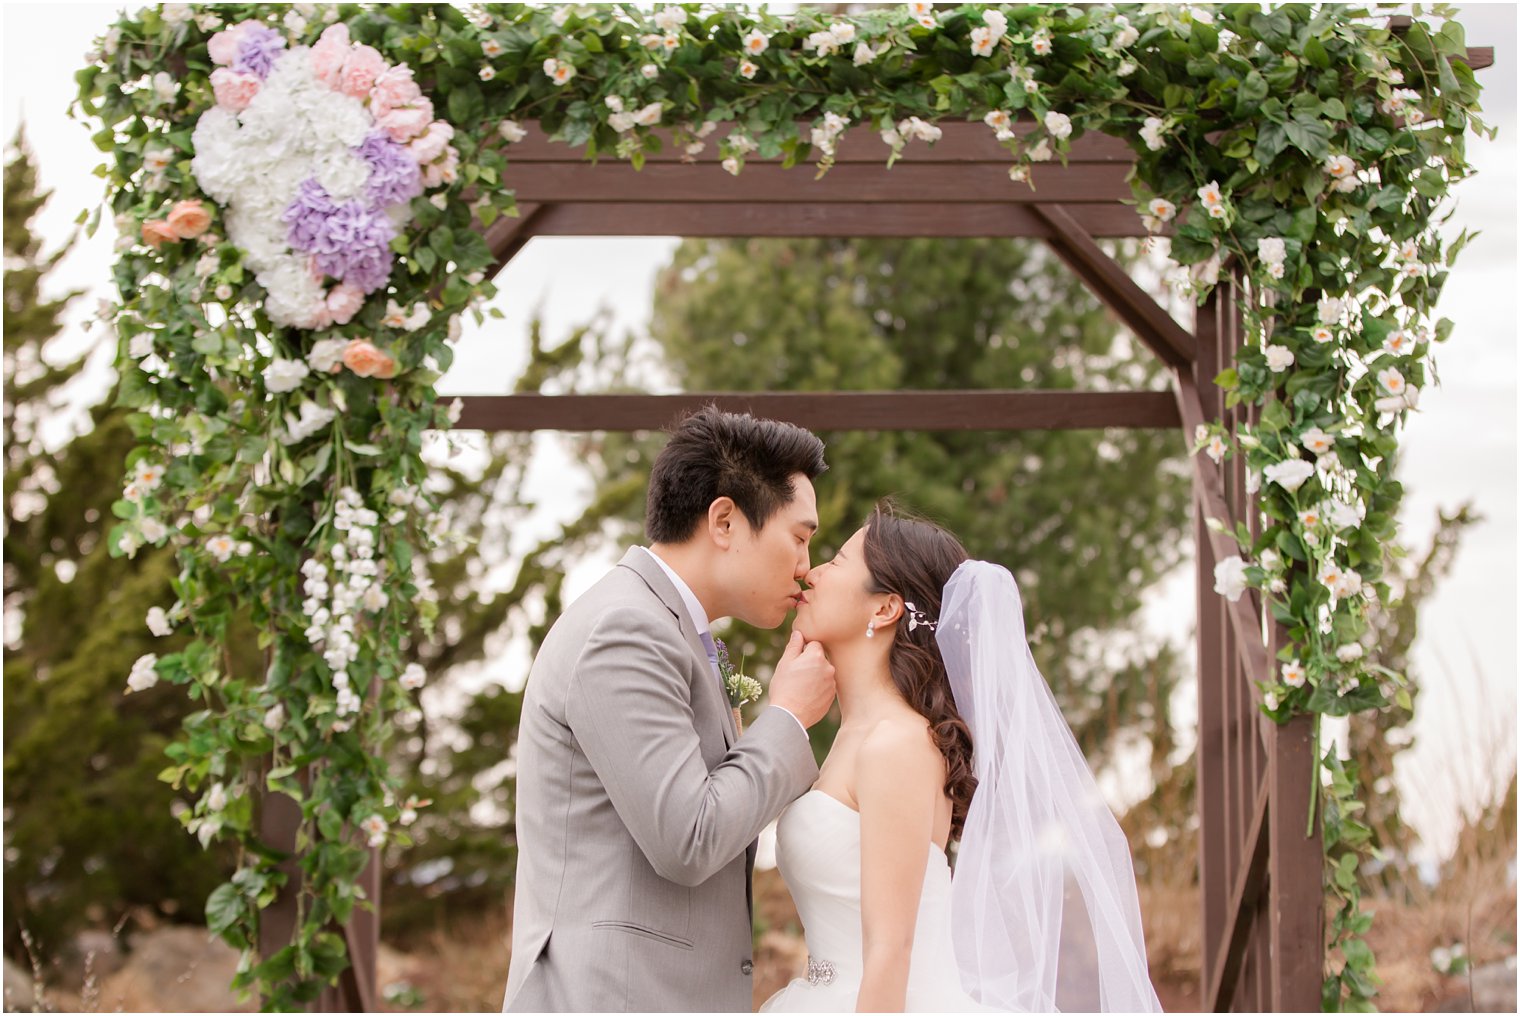 Bride and groom kissing under wedding arbor